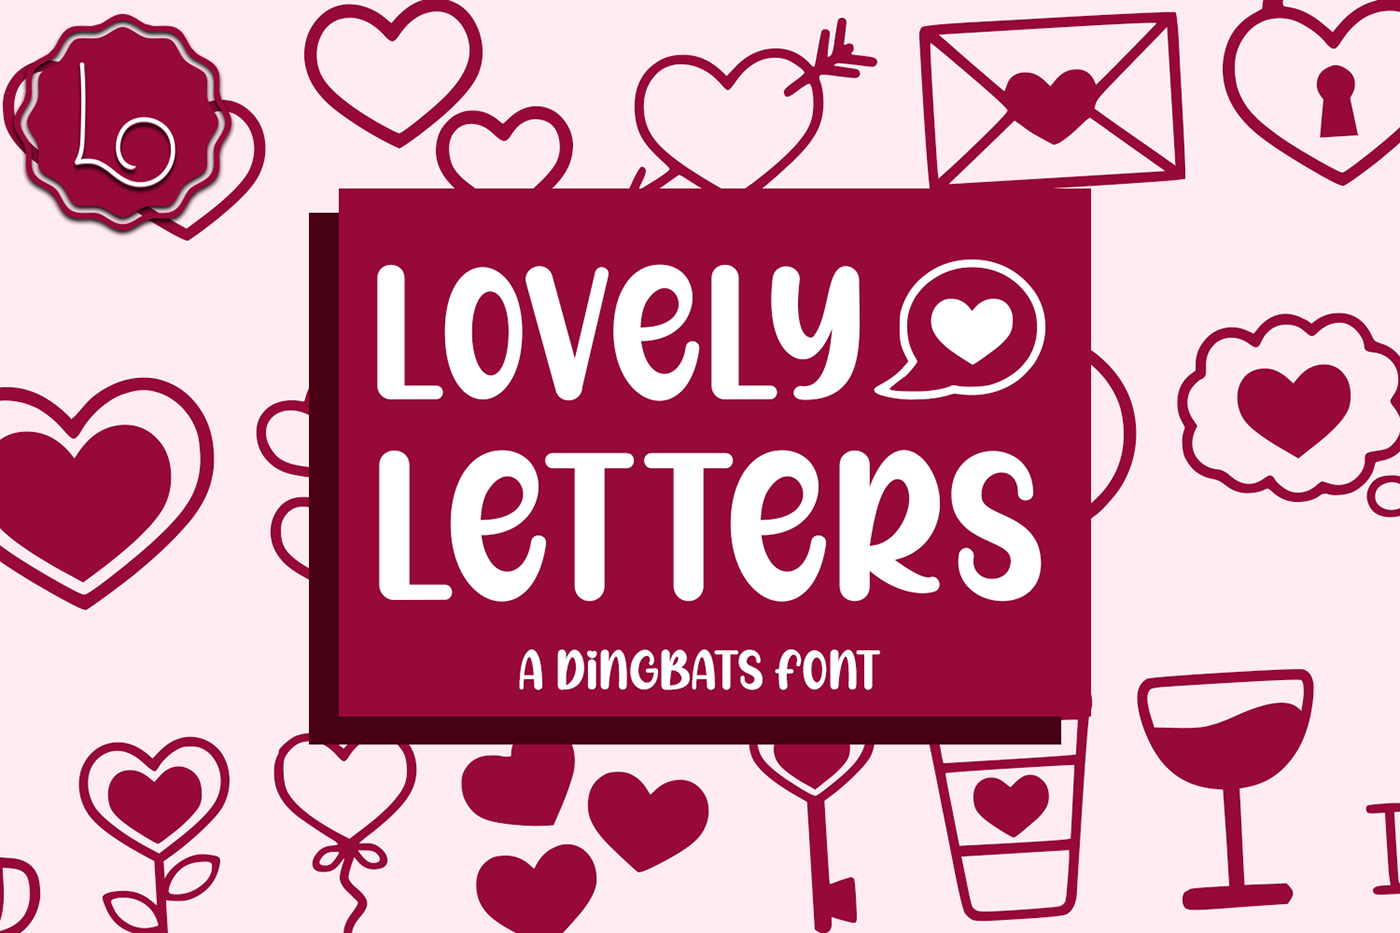 Lovely Letters, A dingbats font